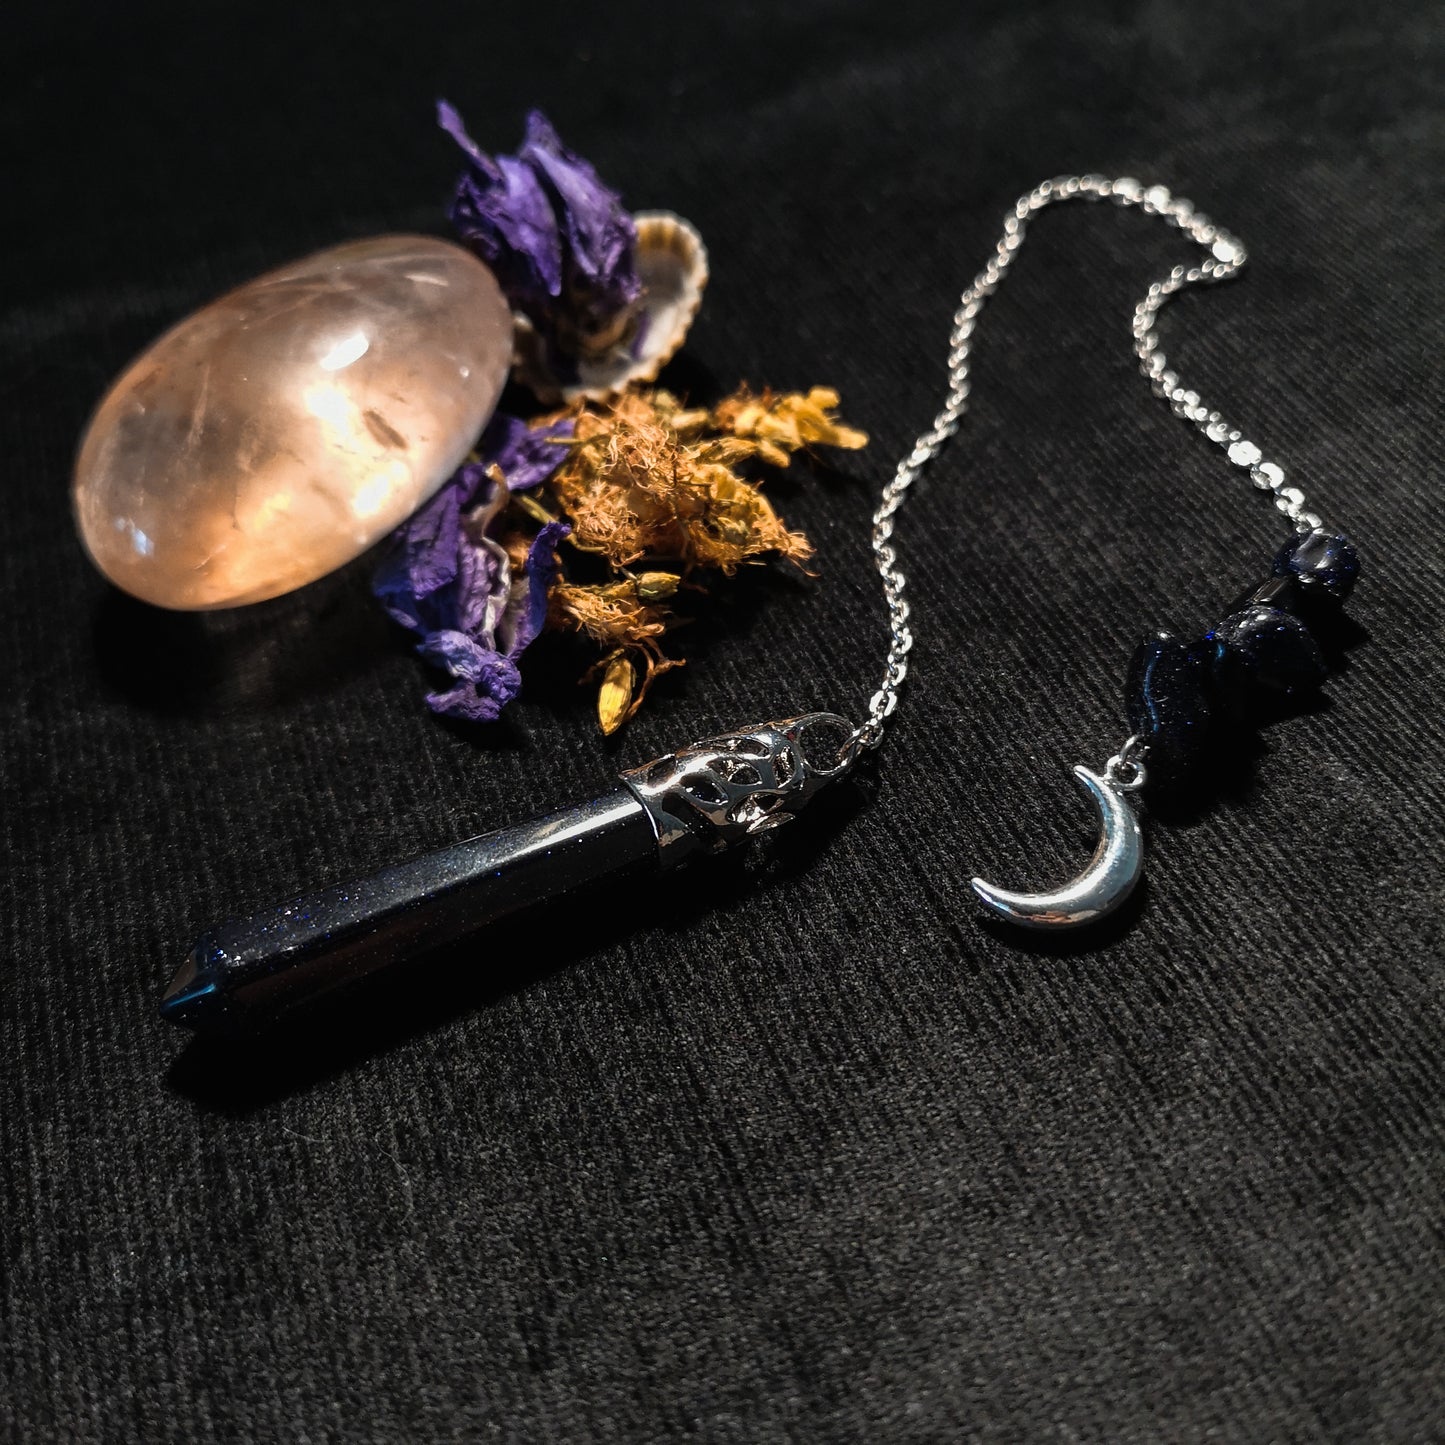 Blue sandstone pendulum with a Moon charm Baguette Magick